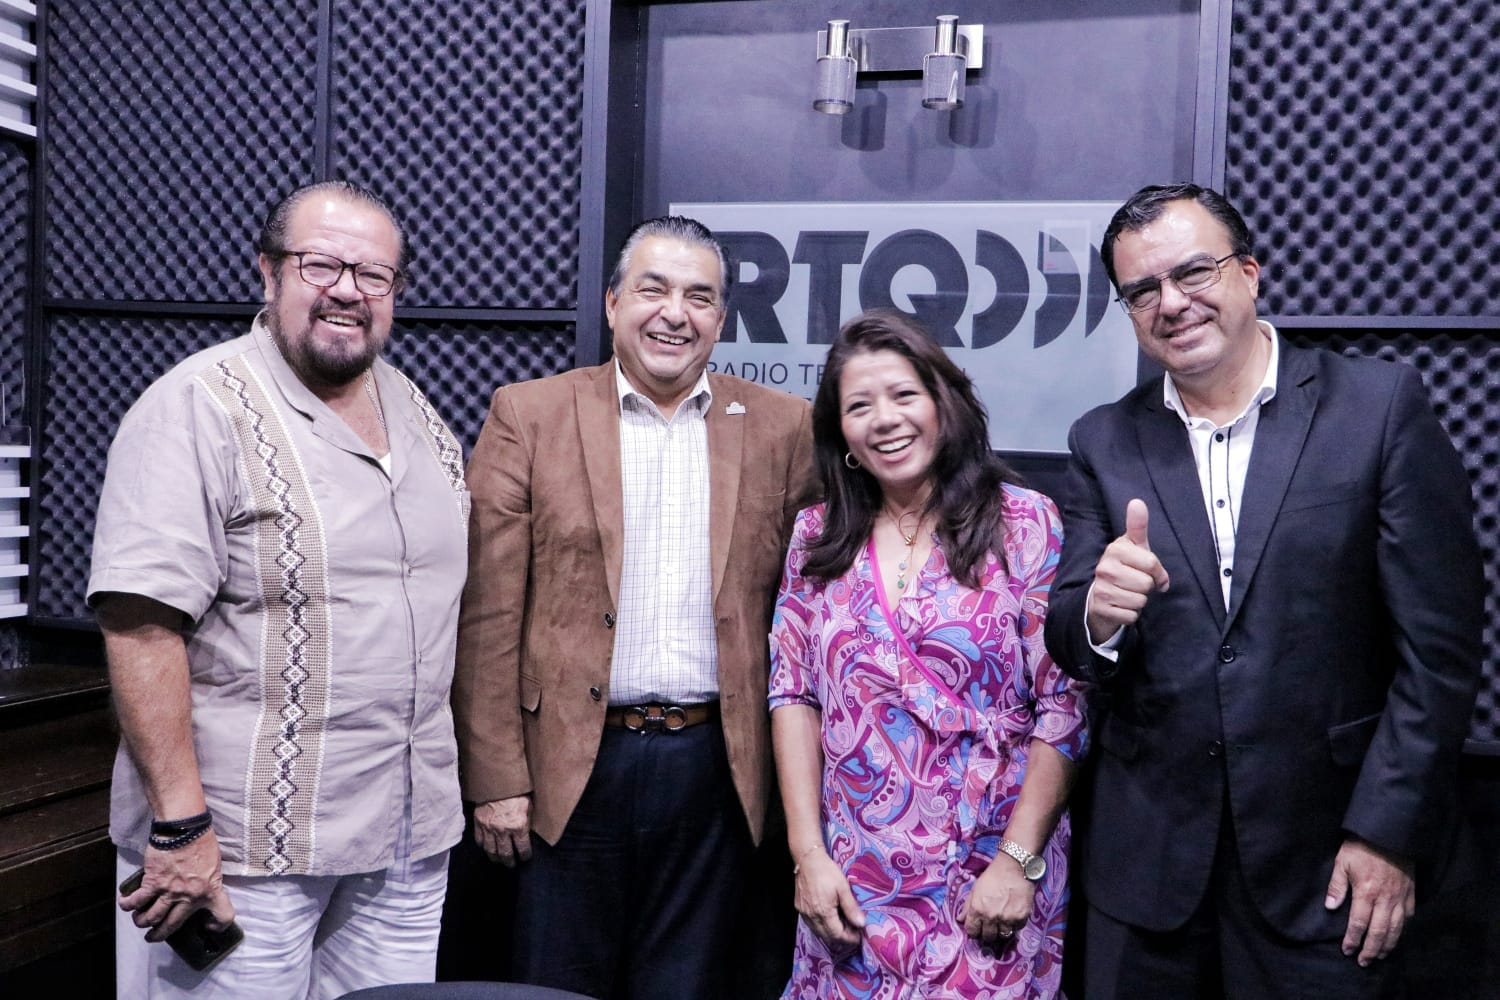 Entrevista con el periodista Oscar Ernesto Chacón Espíritu